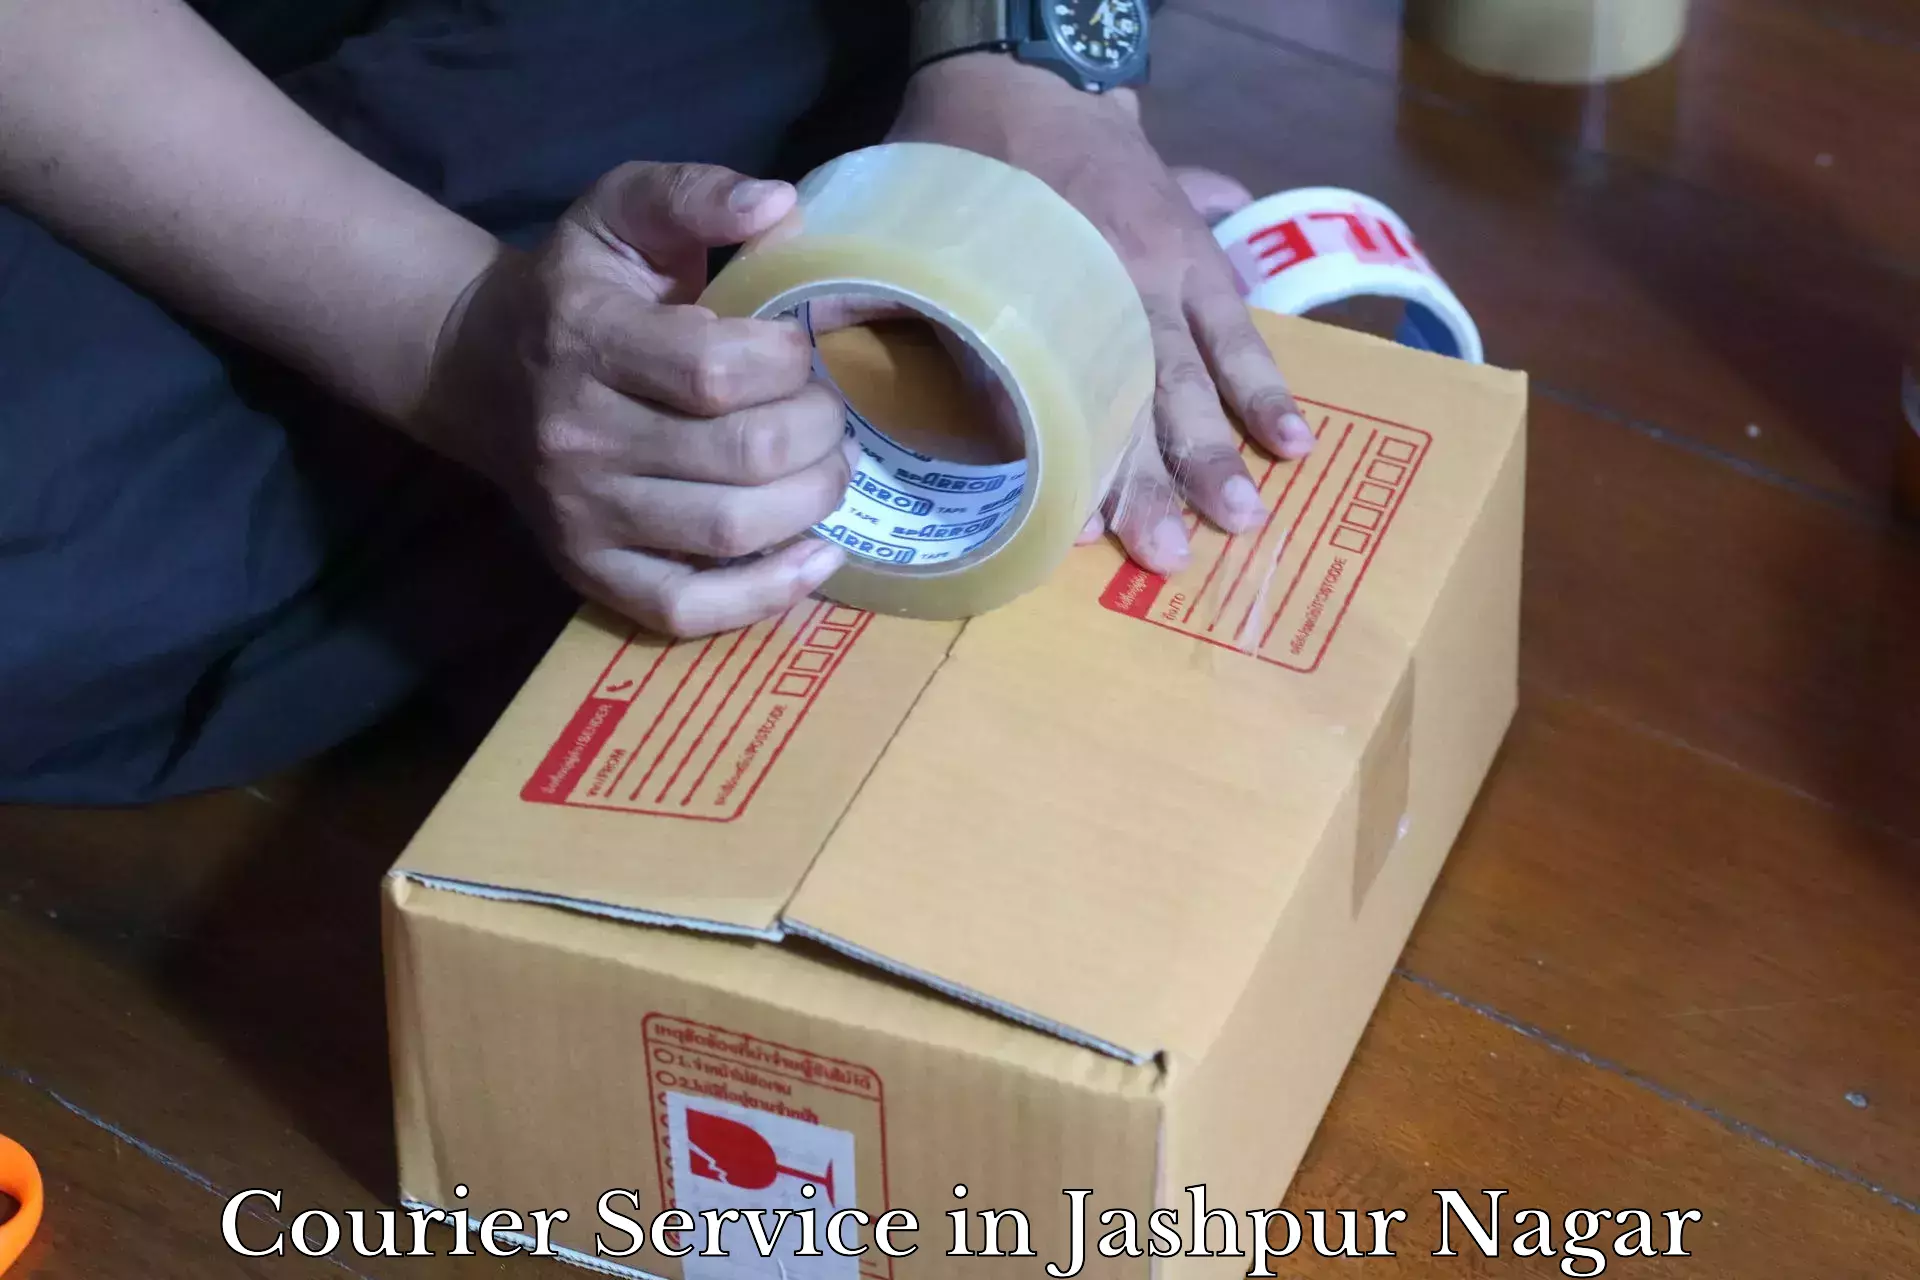 Next-day delivery options in Jashpur Nagar